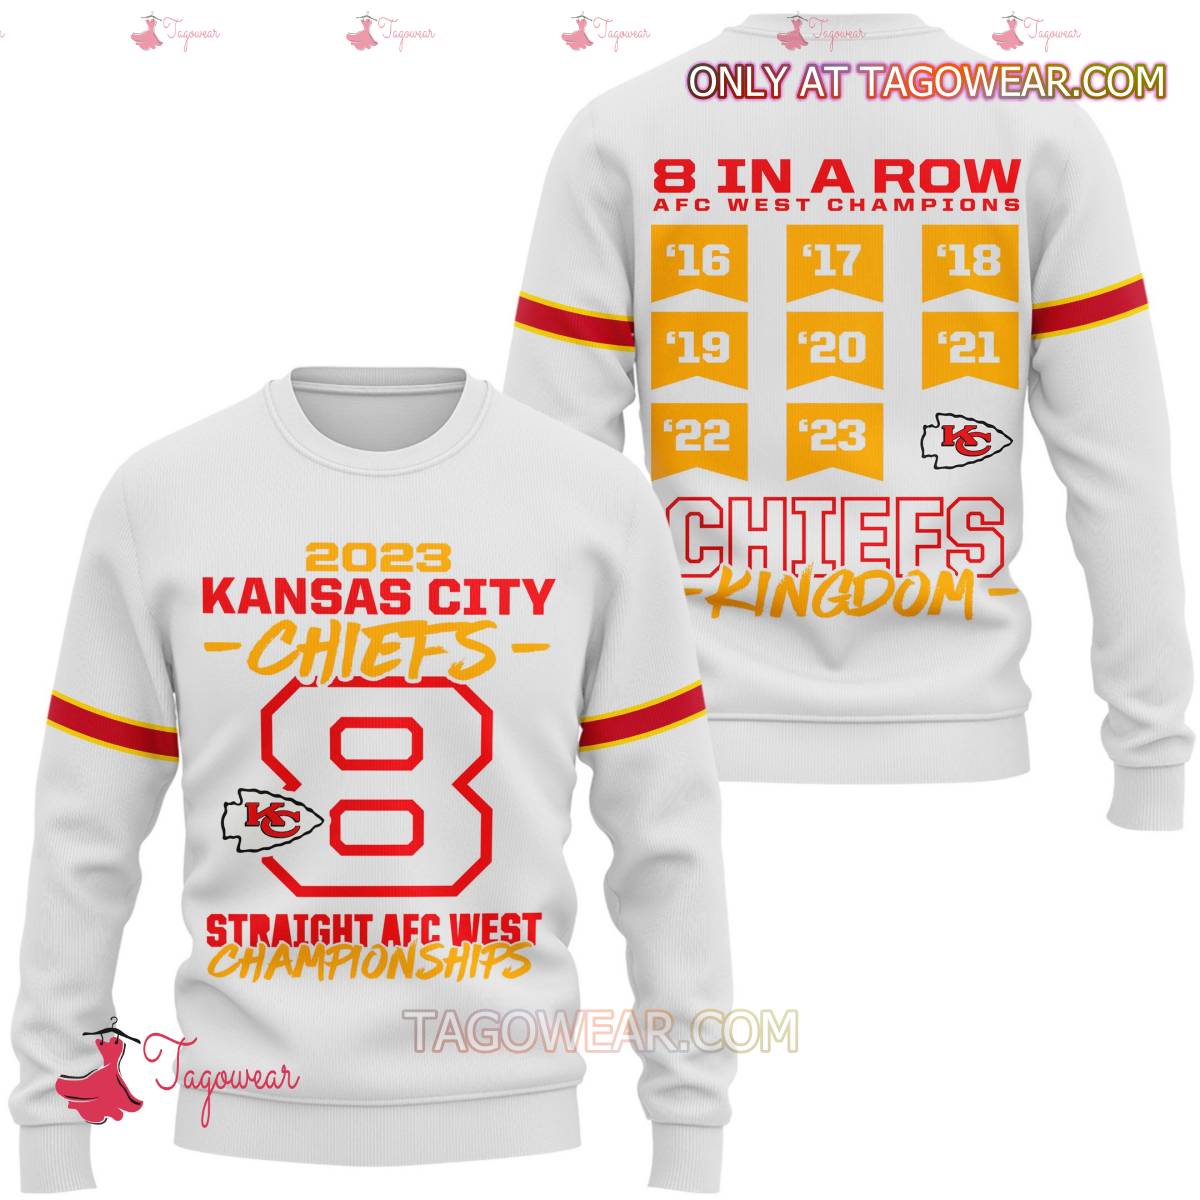 2023 Kansas City Chiefs 8 Straight Afc West Championships T-shirt, Hoodie x